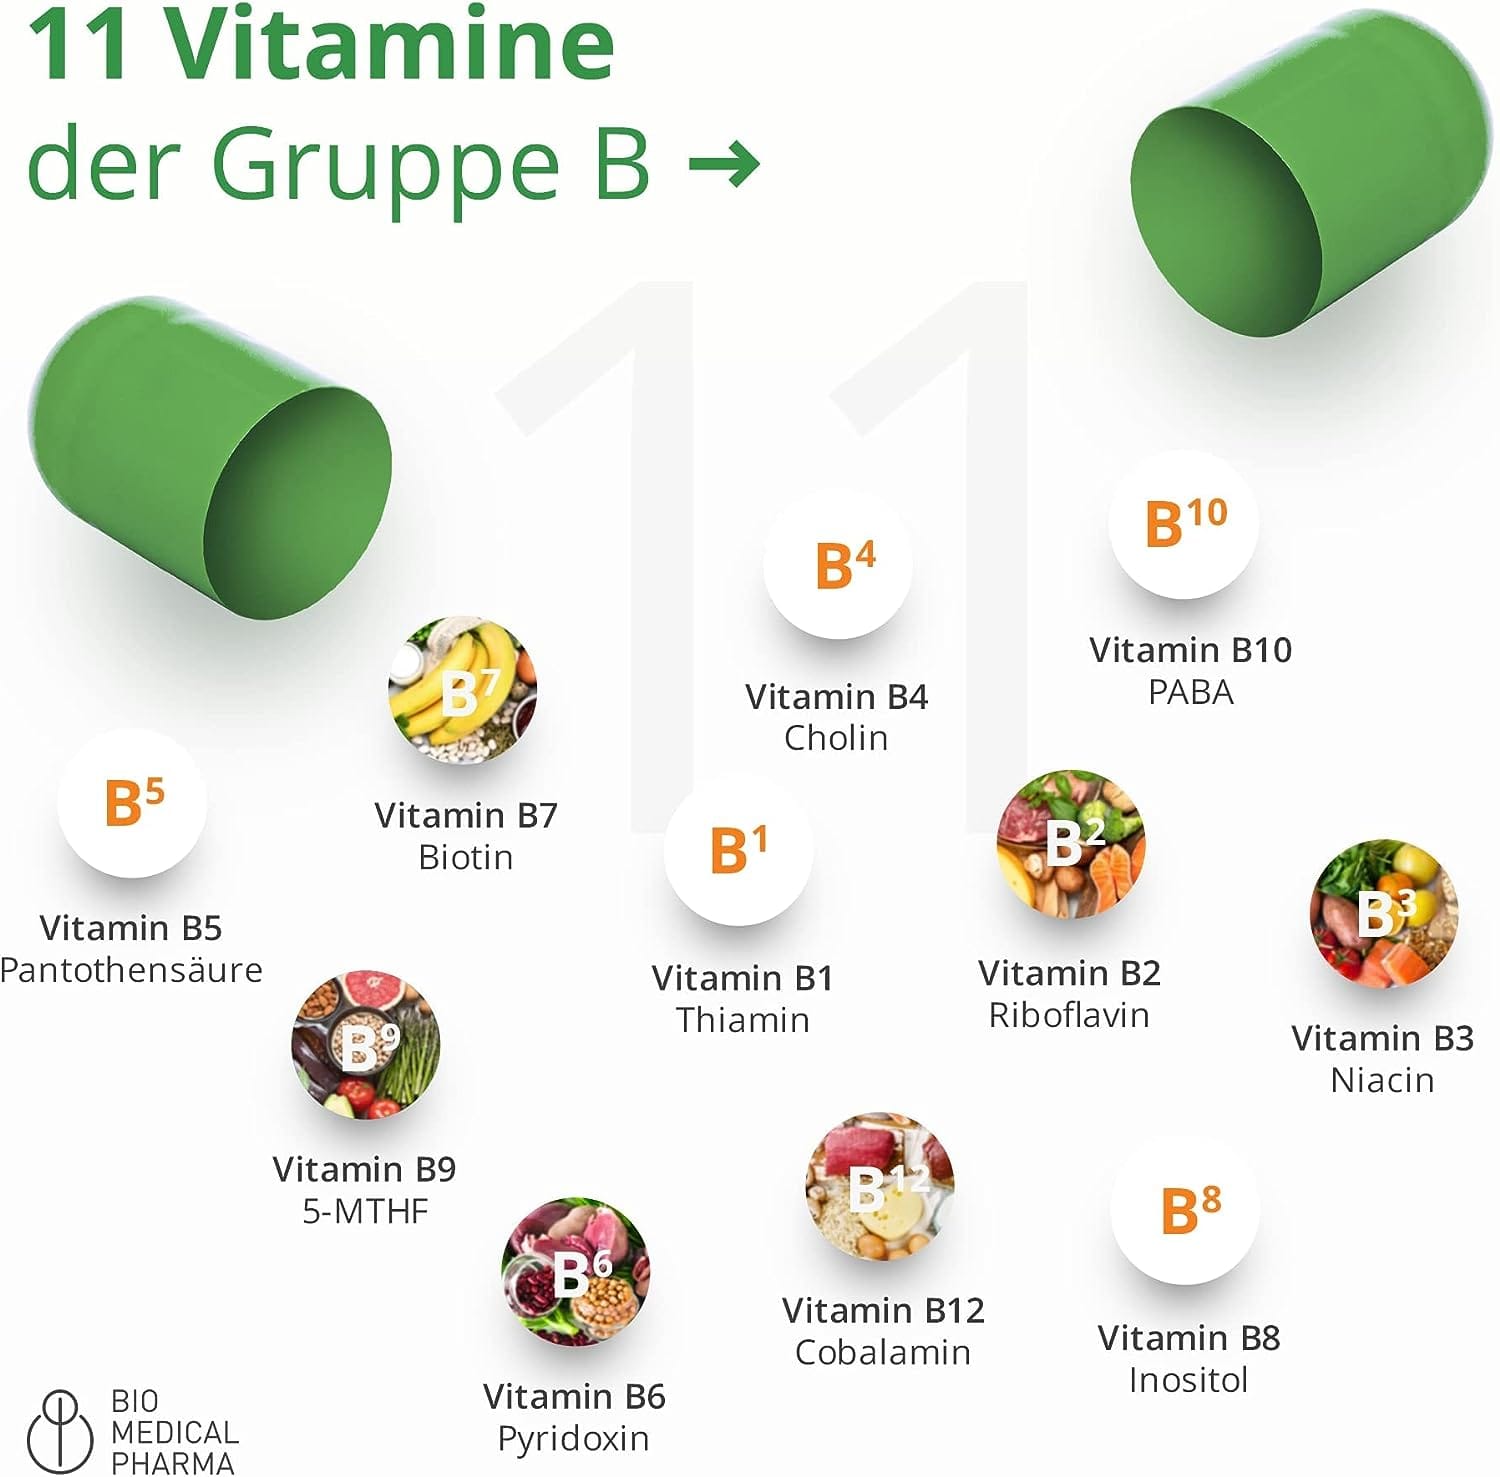 Bio Medical Pharma Vitamin B-Complex Capsules – Supports Energy & Metabolism